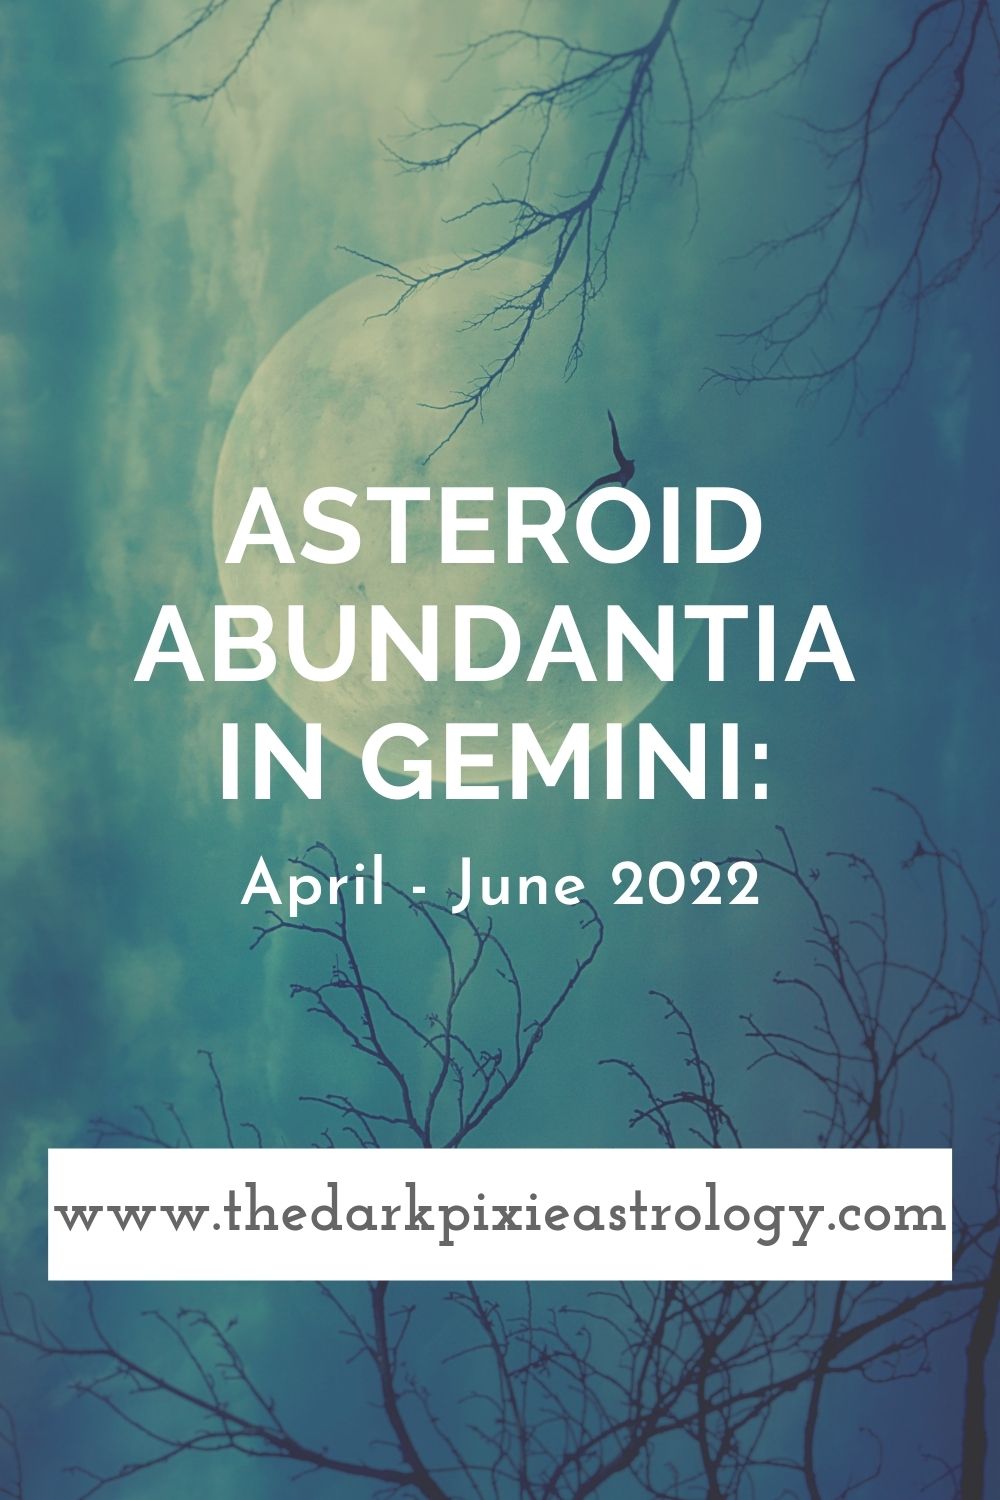 Asteroid Abundantia in Gemini: April - June 2022 - The Dark Pixie Astrology